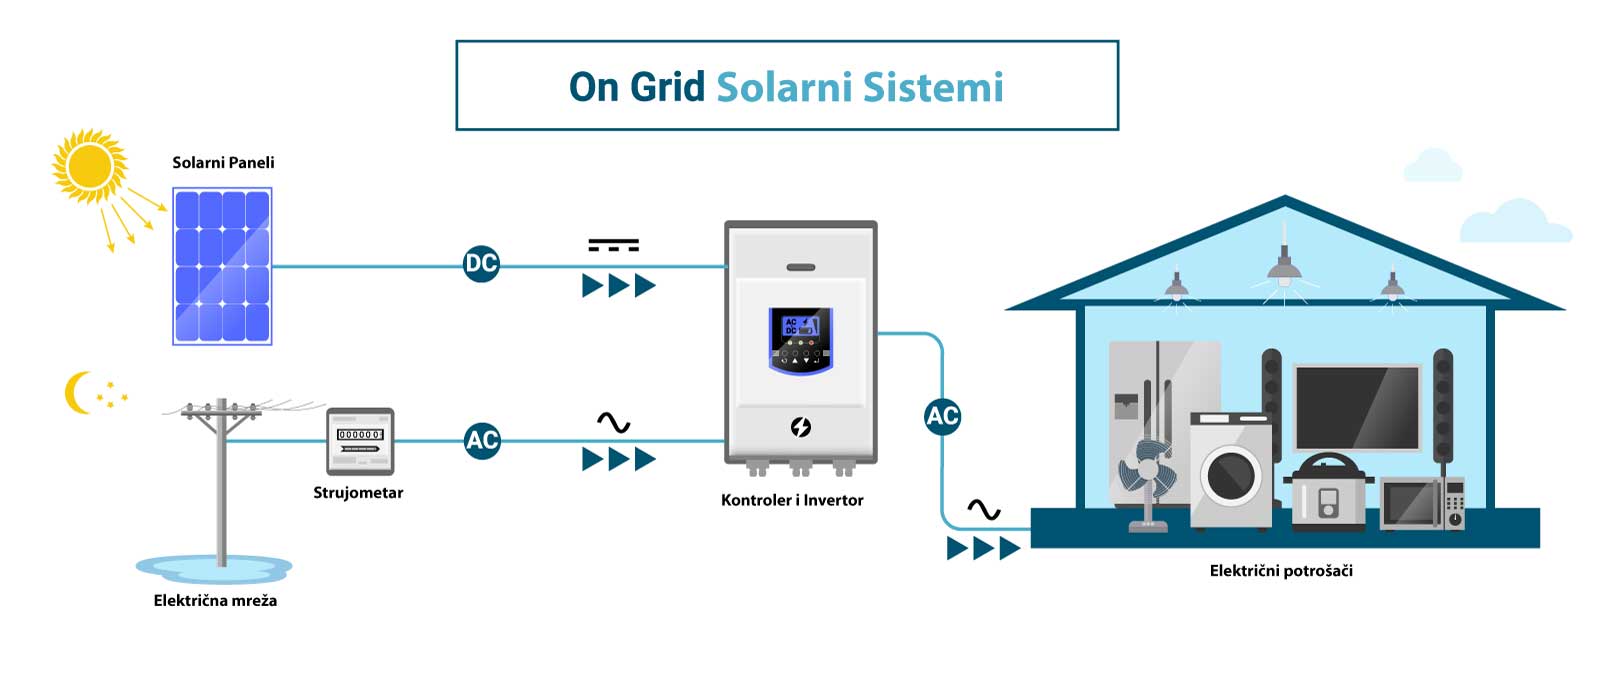 ON-Grid solarne elektrane - Solarni paneli